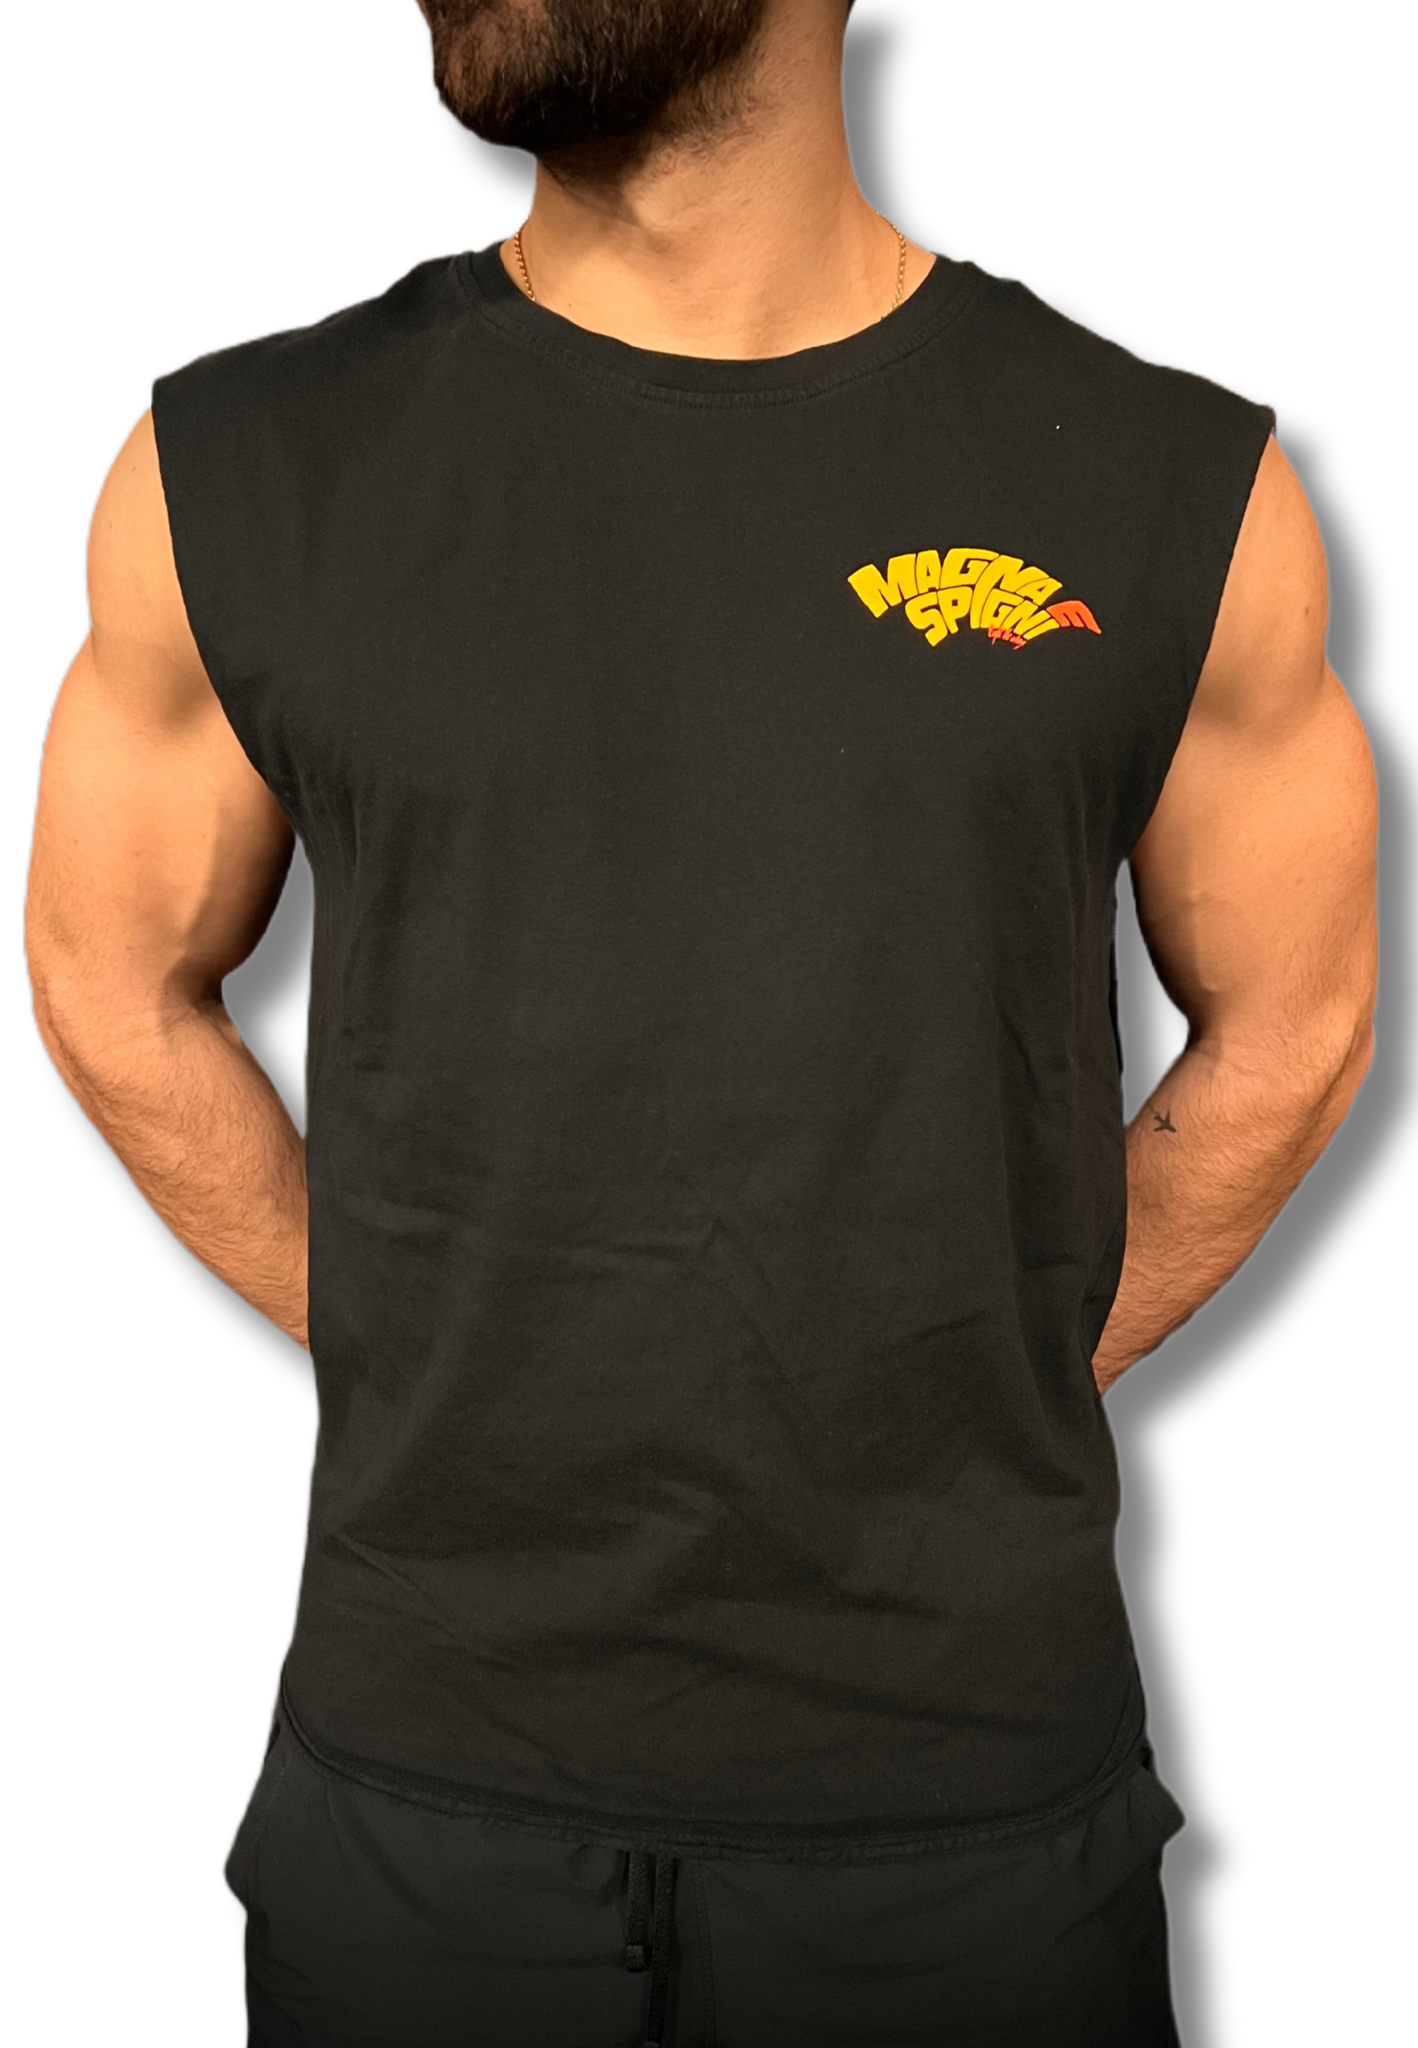 T-shirt Sleeveless Limited Edition Nera- MAGNA E SPIGNI®